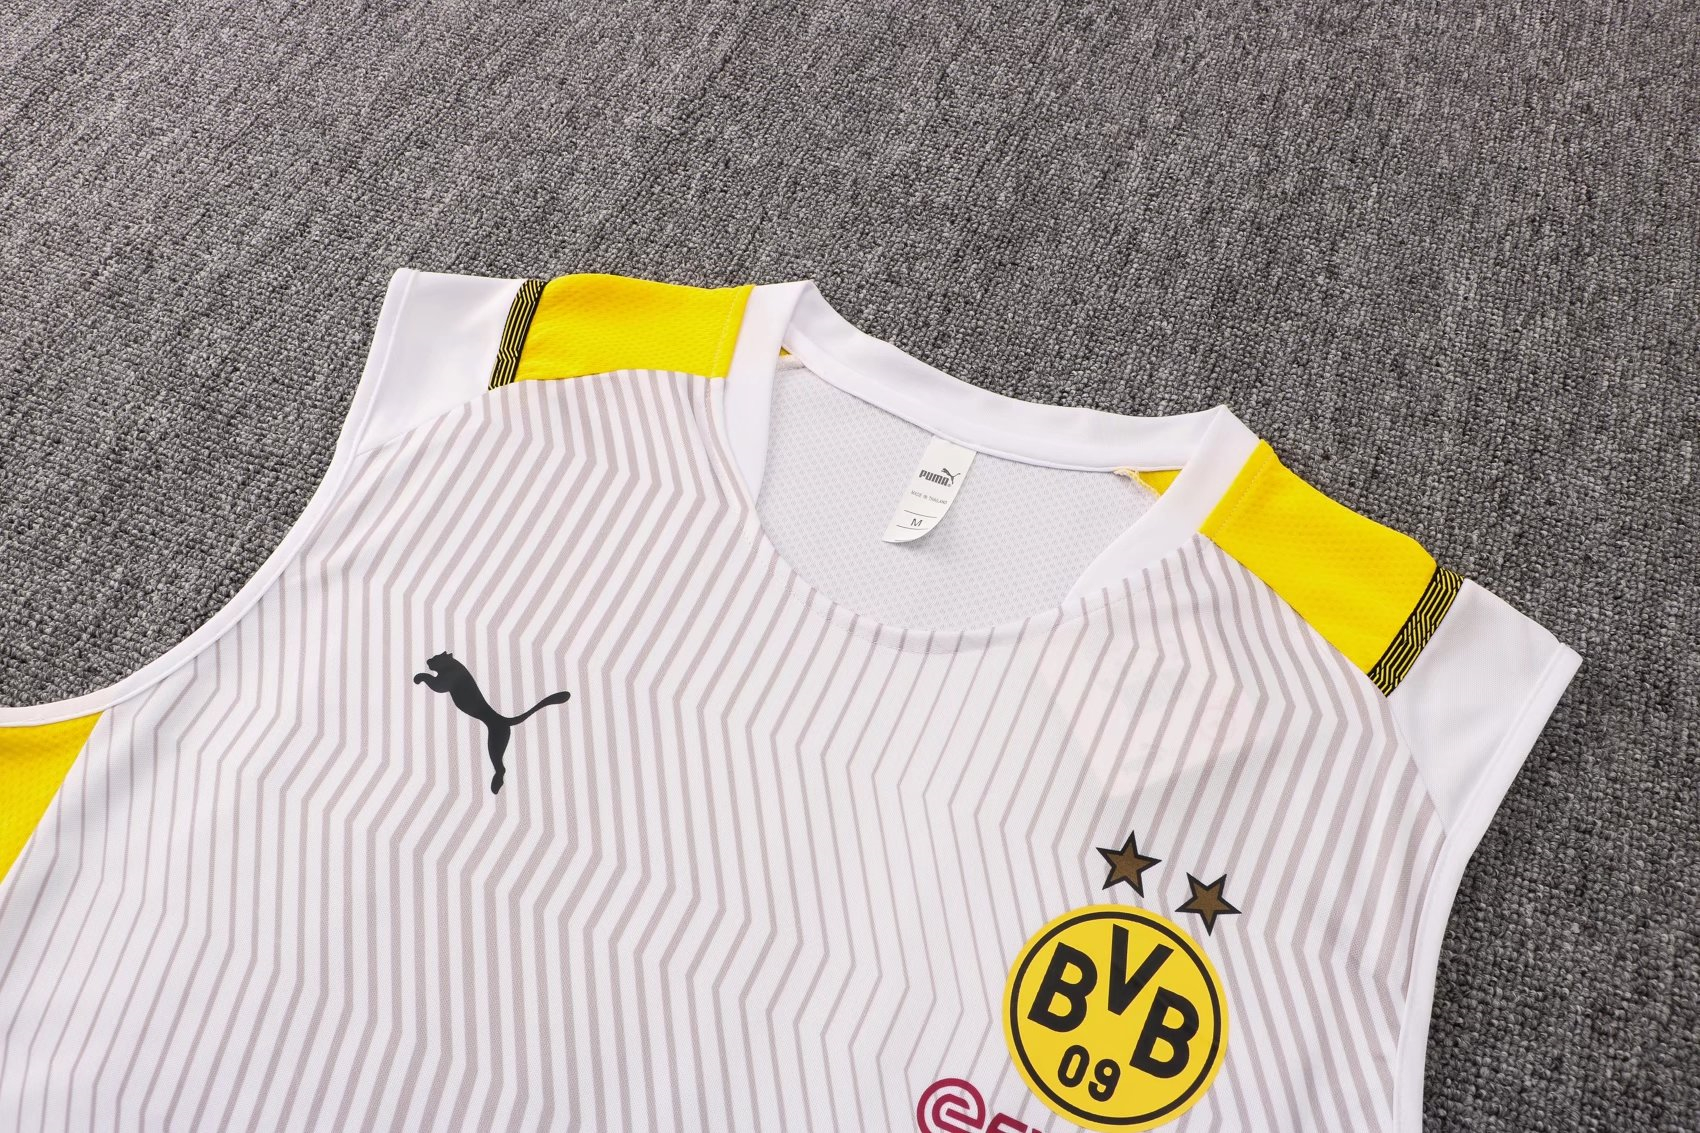 Borussia Dortmund Soccer Singlet Jersey Replica White Mens 2021/22